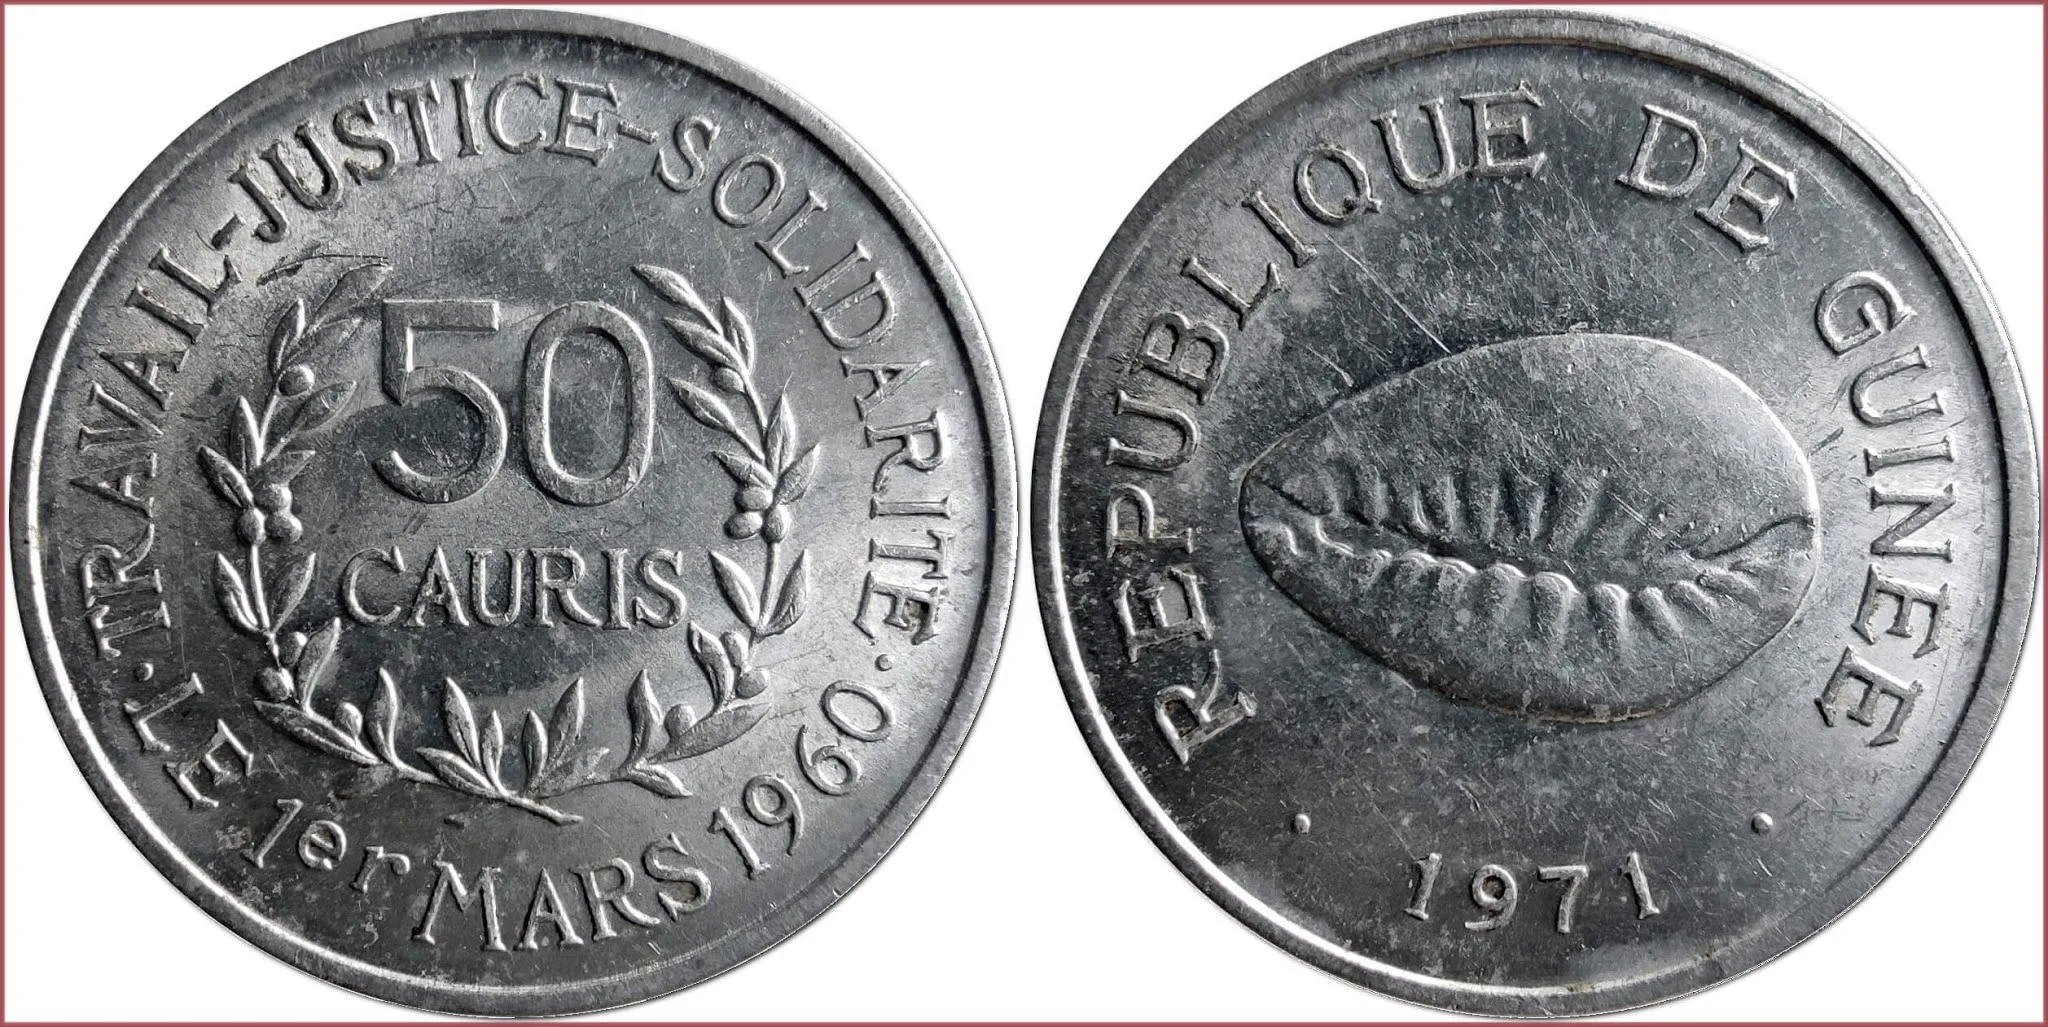 50 cauri, 1971: Republic of Guinea